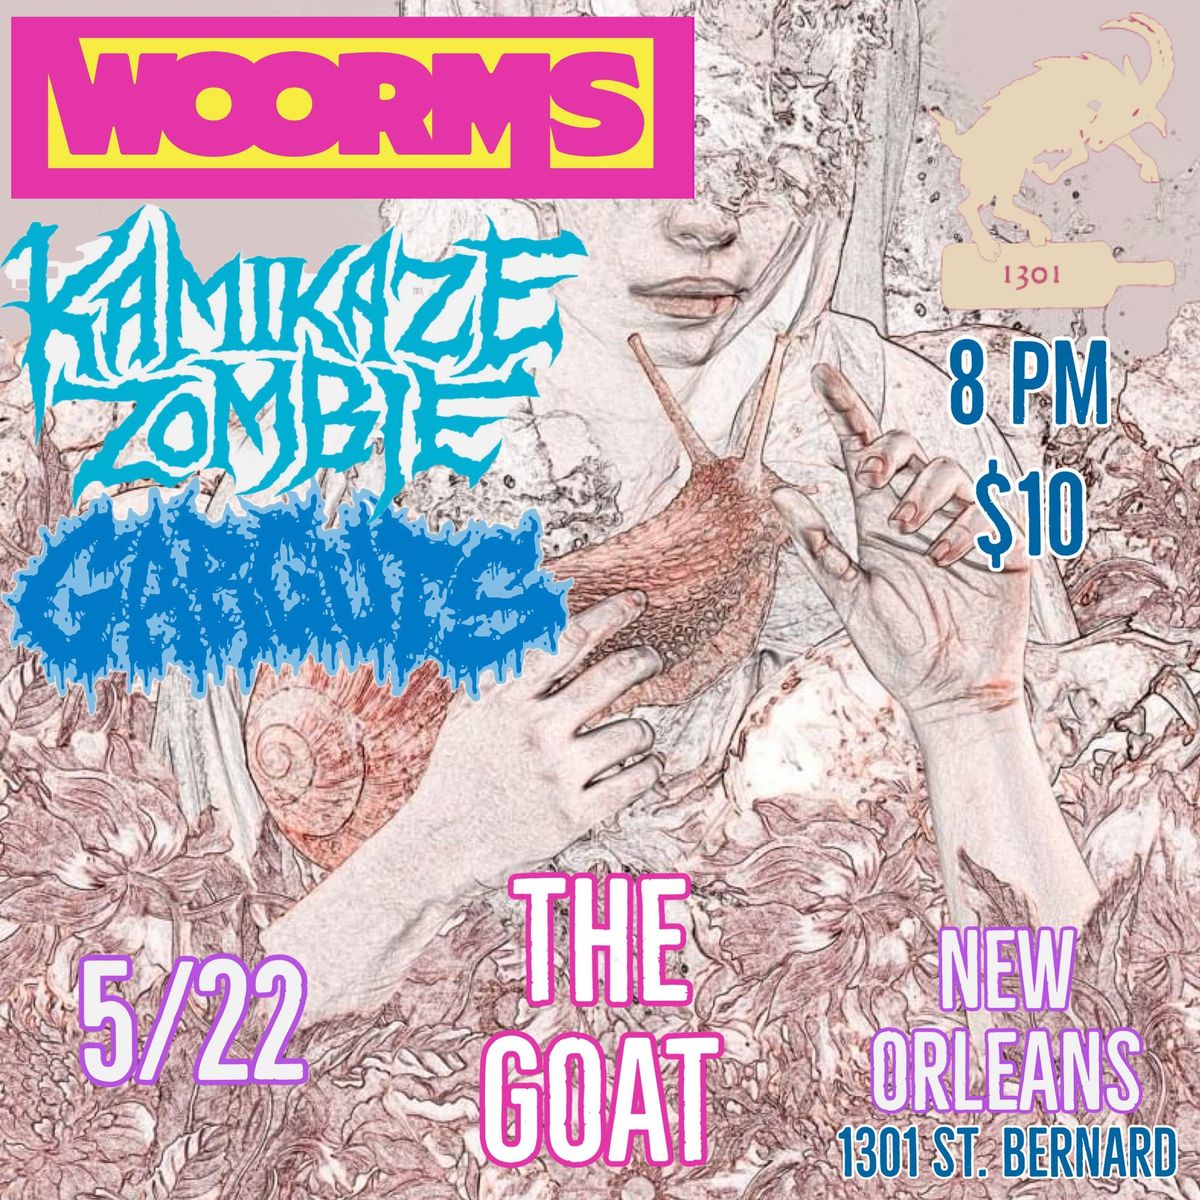 WOORMS, Kamikaze Zombie, Garguts @The Goat 5\/22\/24